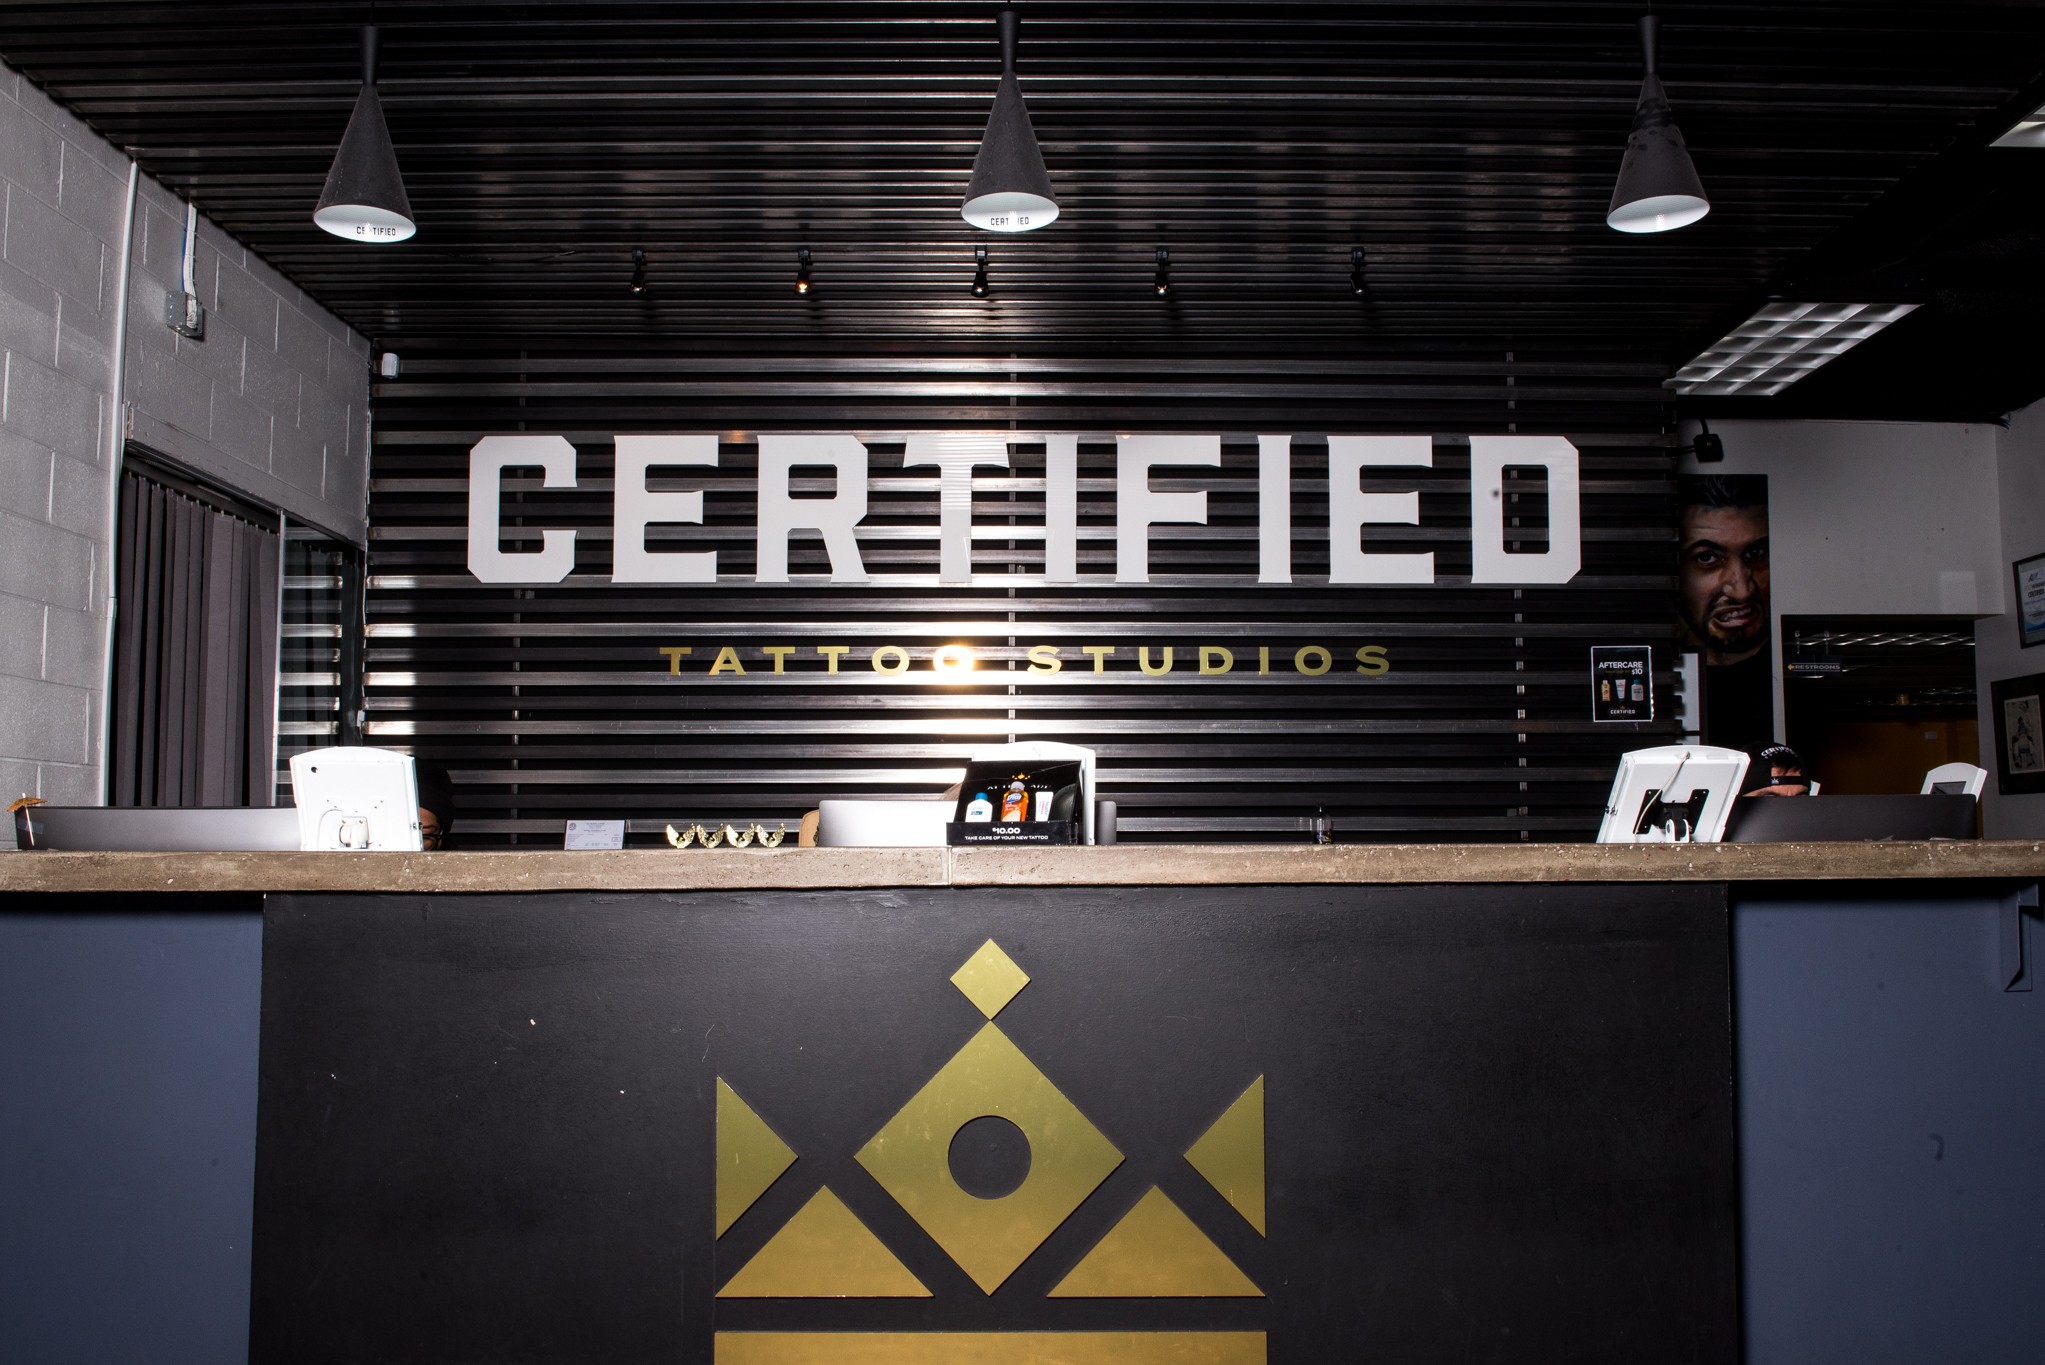 Joseph Blacksmith  Certified Tattoo Studios